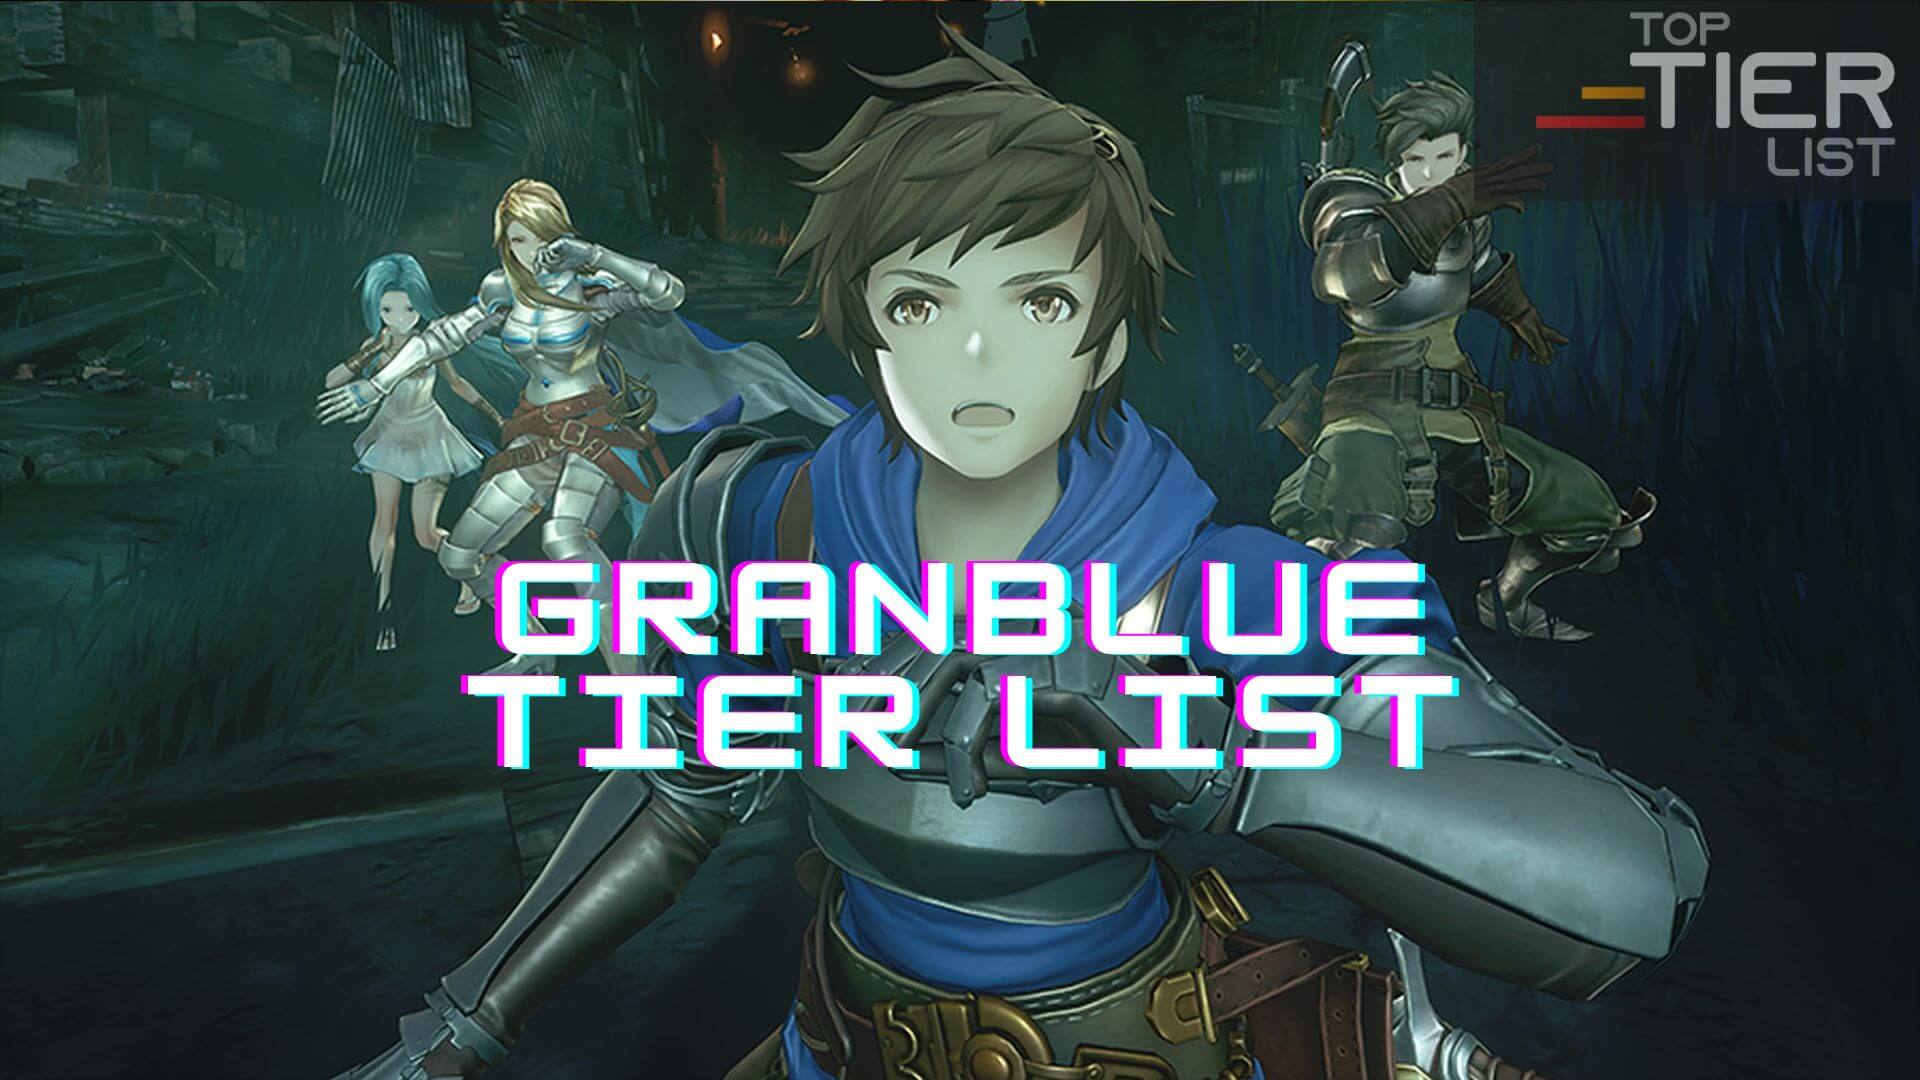 Acqua releases his tier list for Granblue Fantasy: Versus